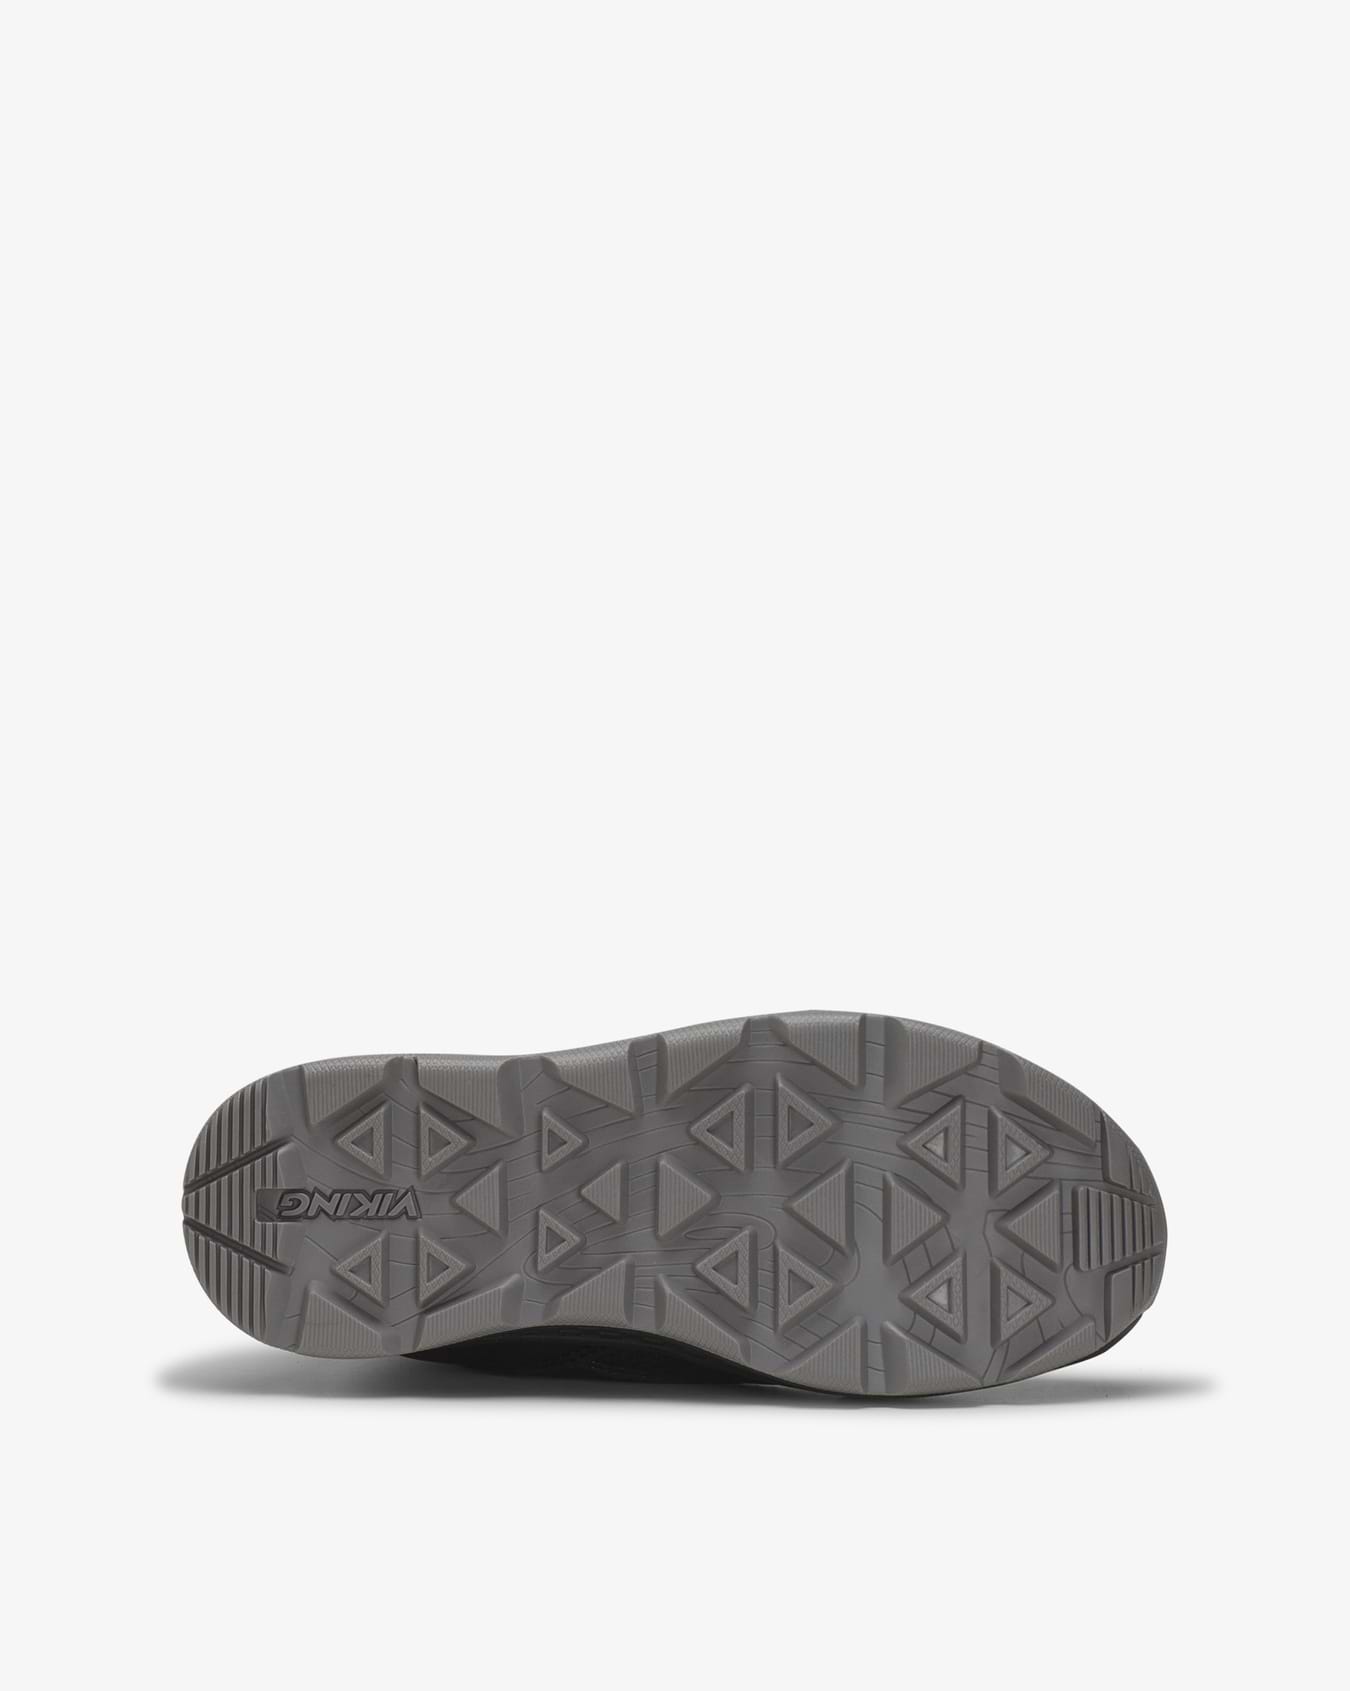 Viking Espo High 2 Jr Winter Shoes Black Waterproof Insulated Boa